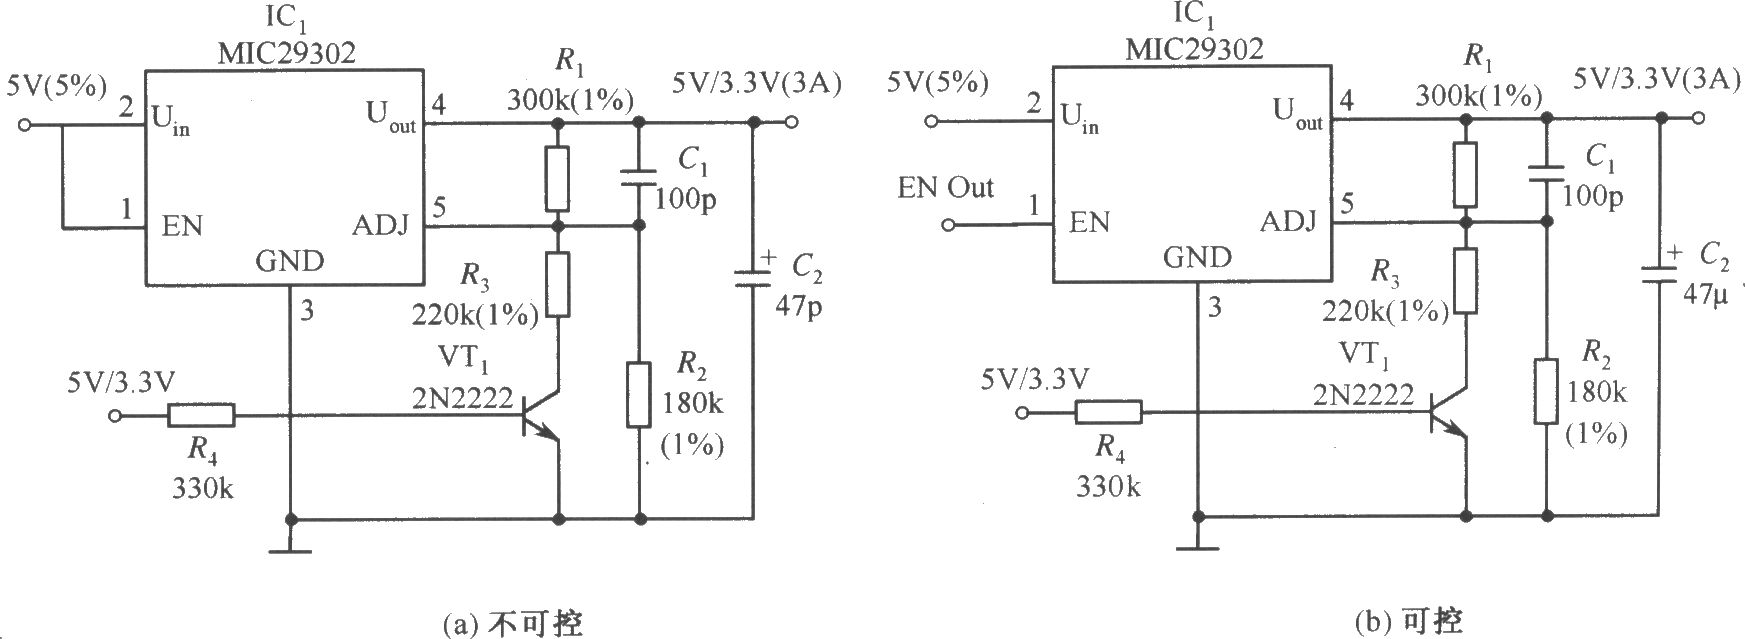 MIC29302构成的输出电压为3.3V／5V可选择的稳压器电路